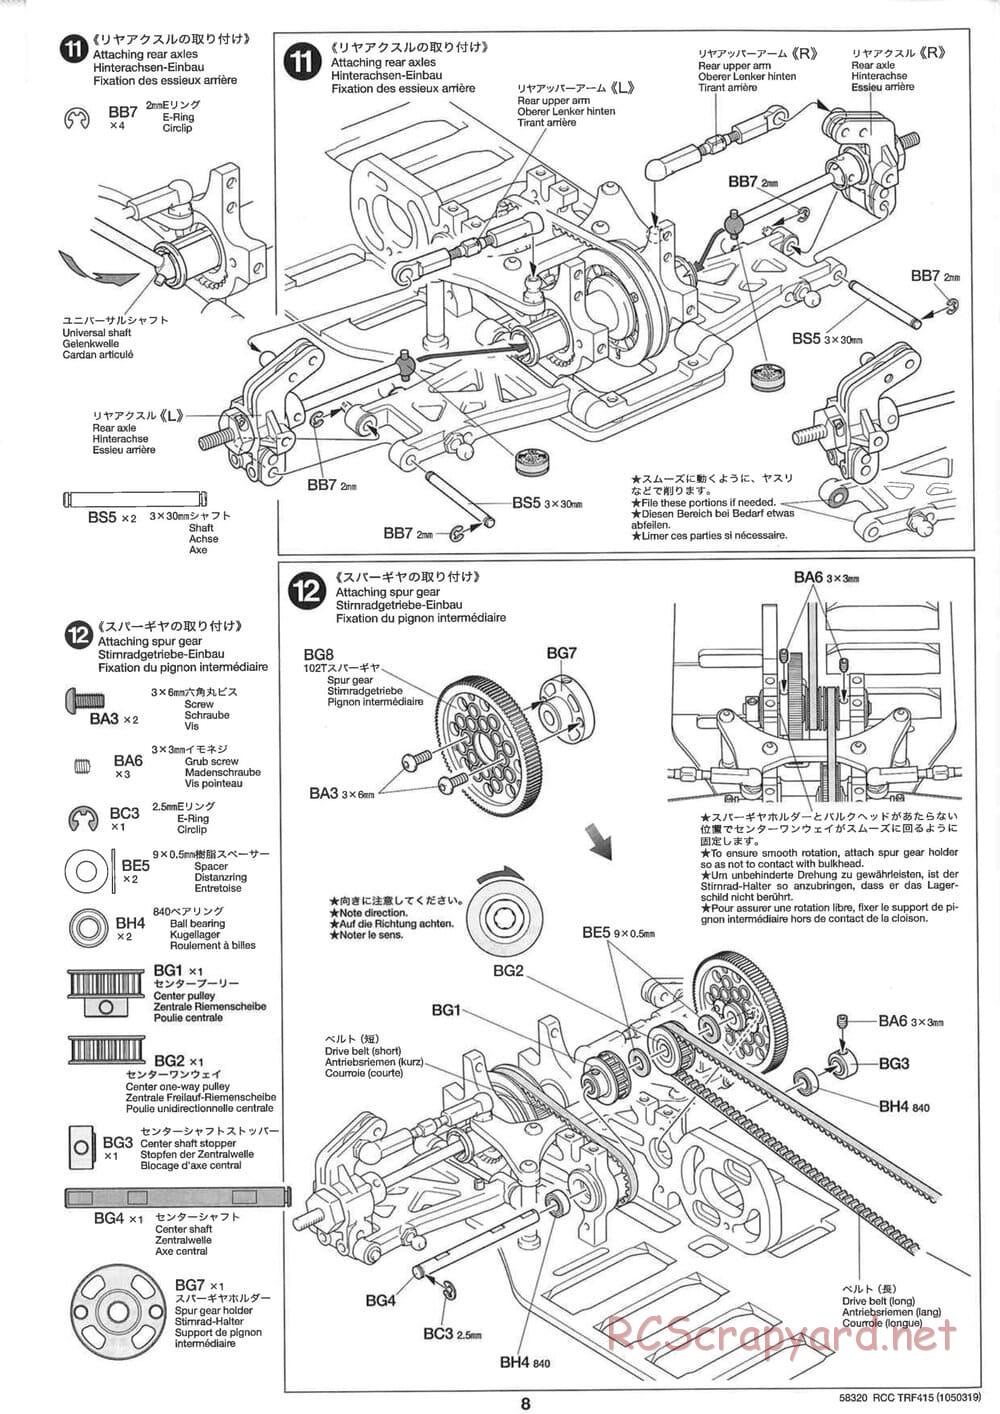 Tamiya - TRF415 Chassis - Manual - Page 8